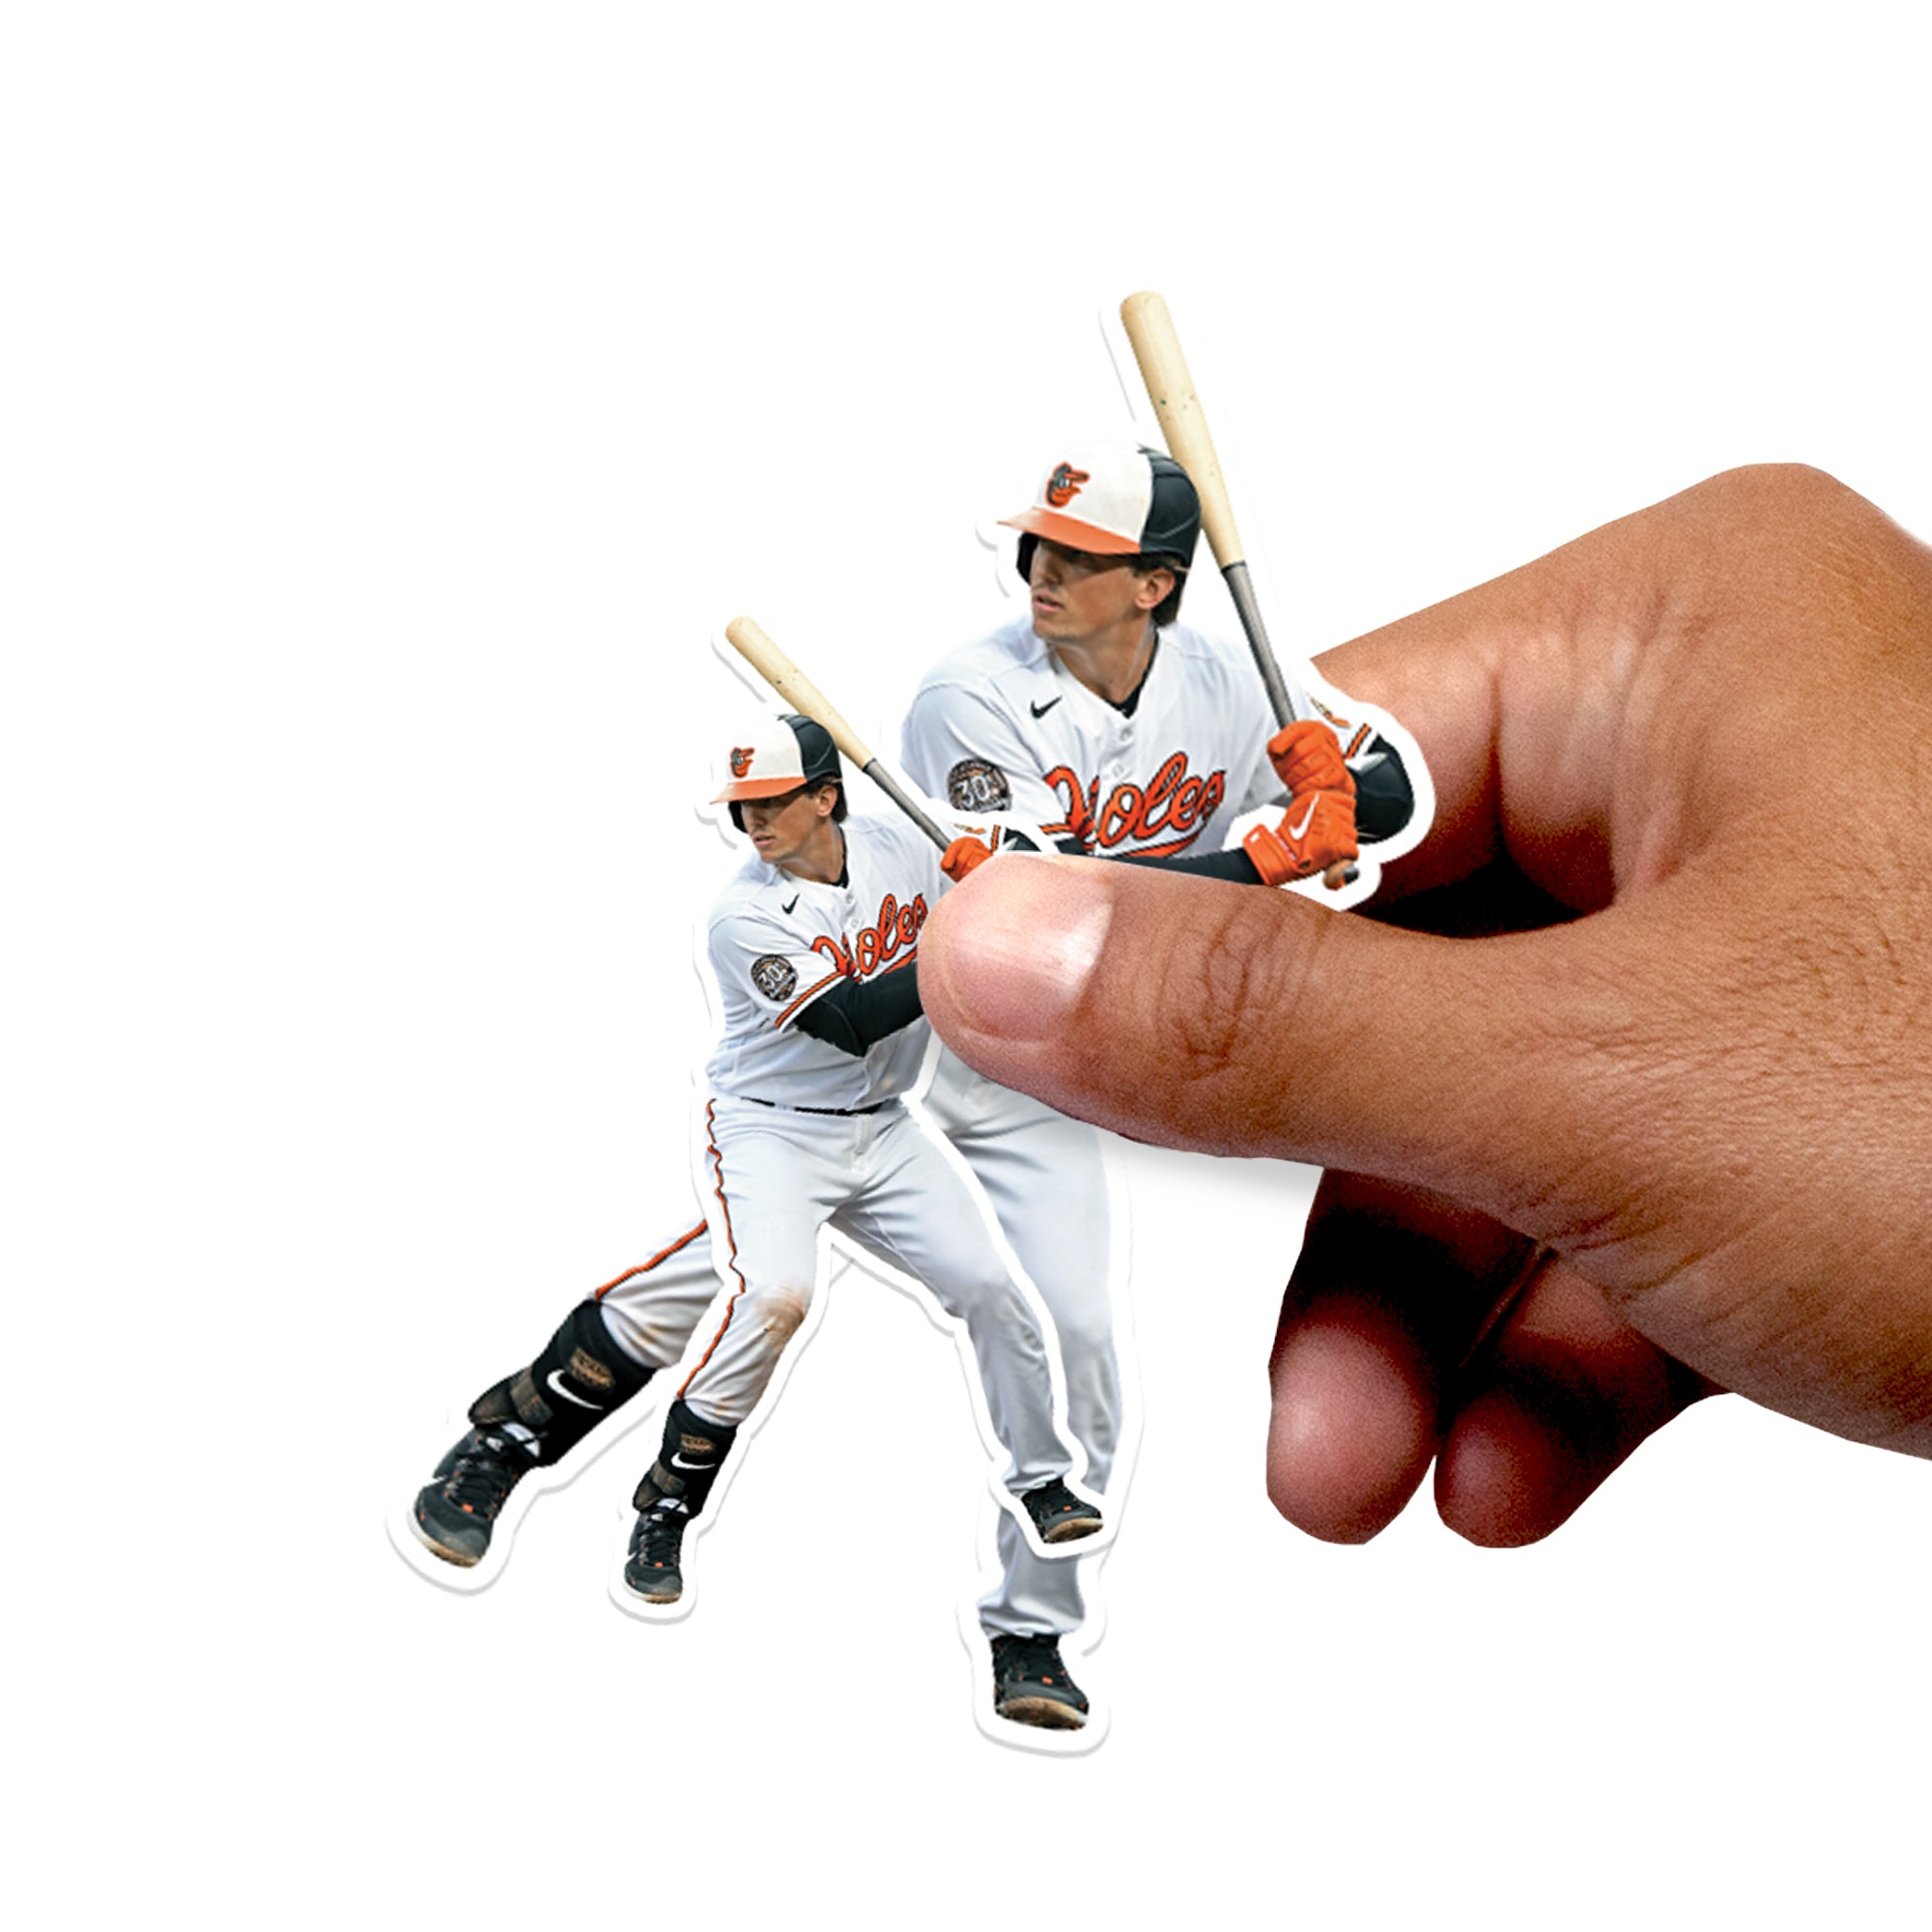 Baltimore Orioles: Adley Rutschman 2022 Mini Cardstock Cutout - Offici